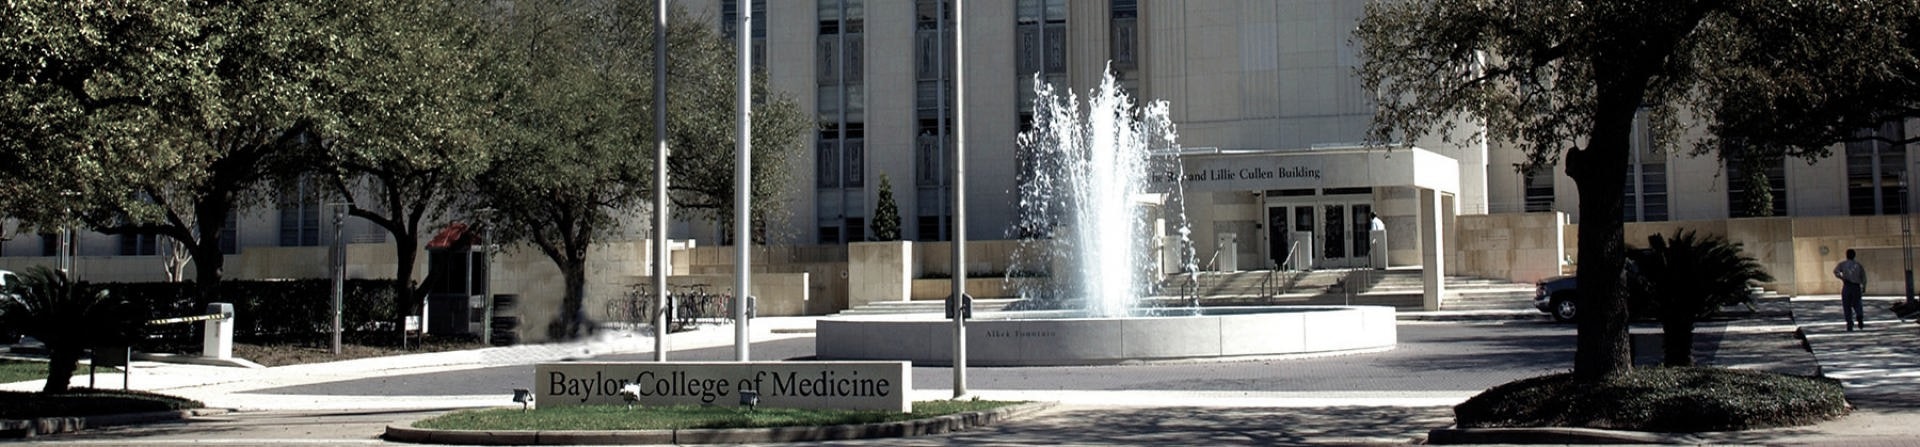 Photo of baylor college of medicine 1